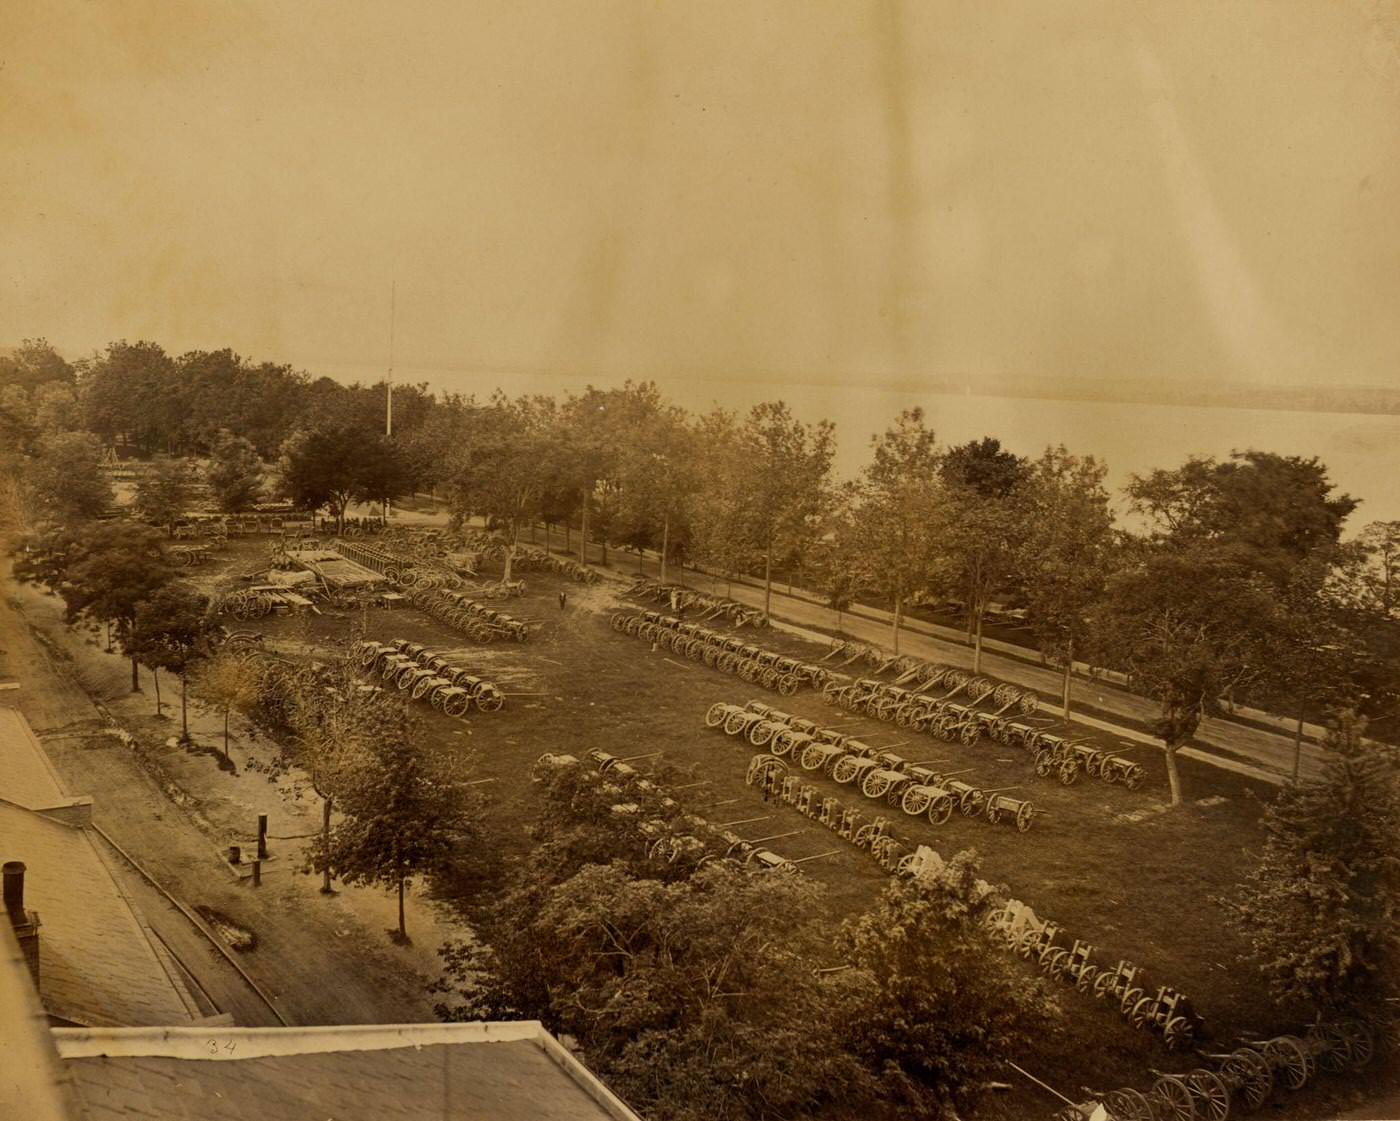 View in arsenal yard, Washington, D.C., 1863